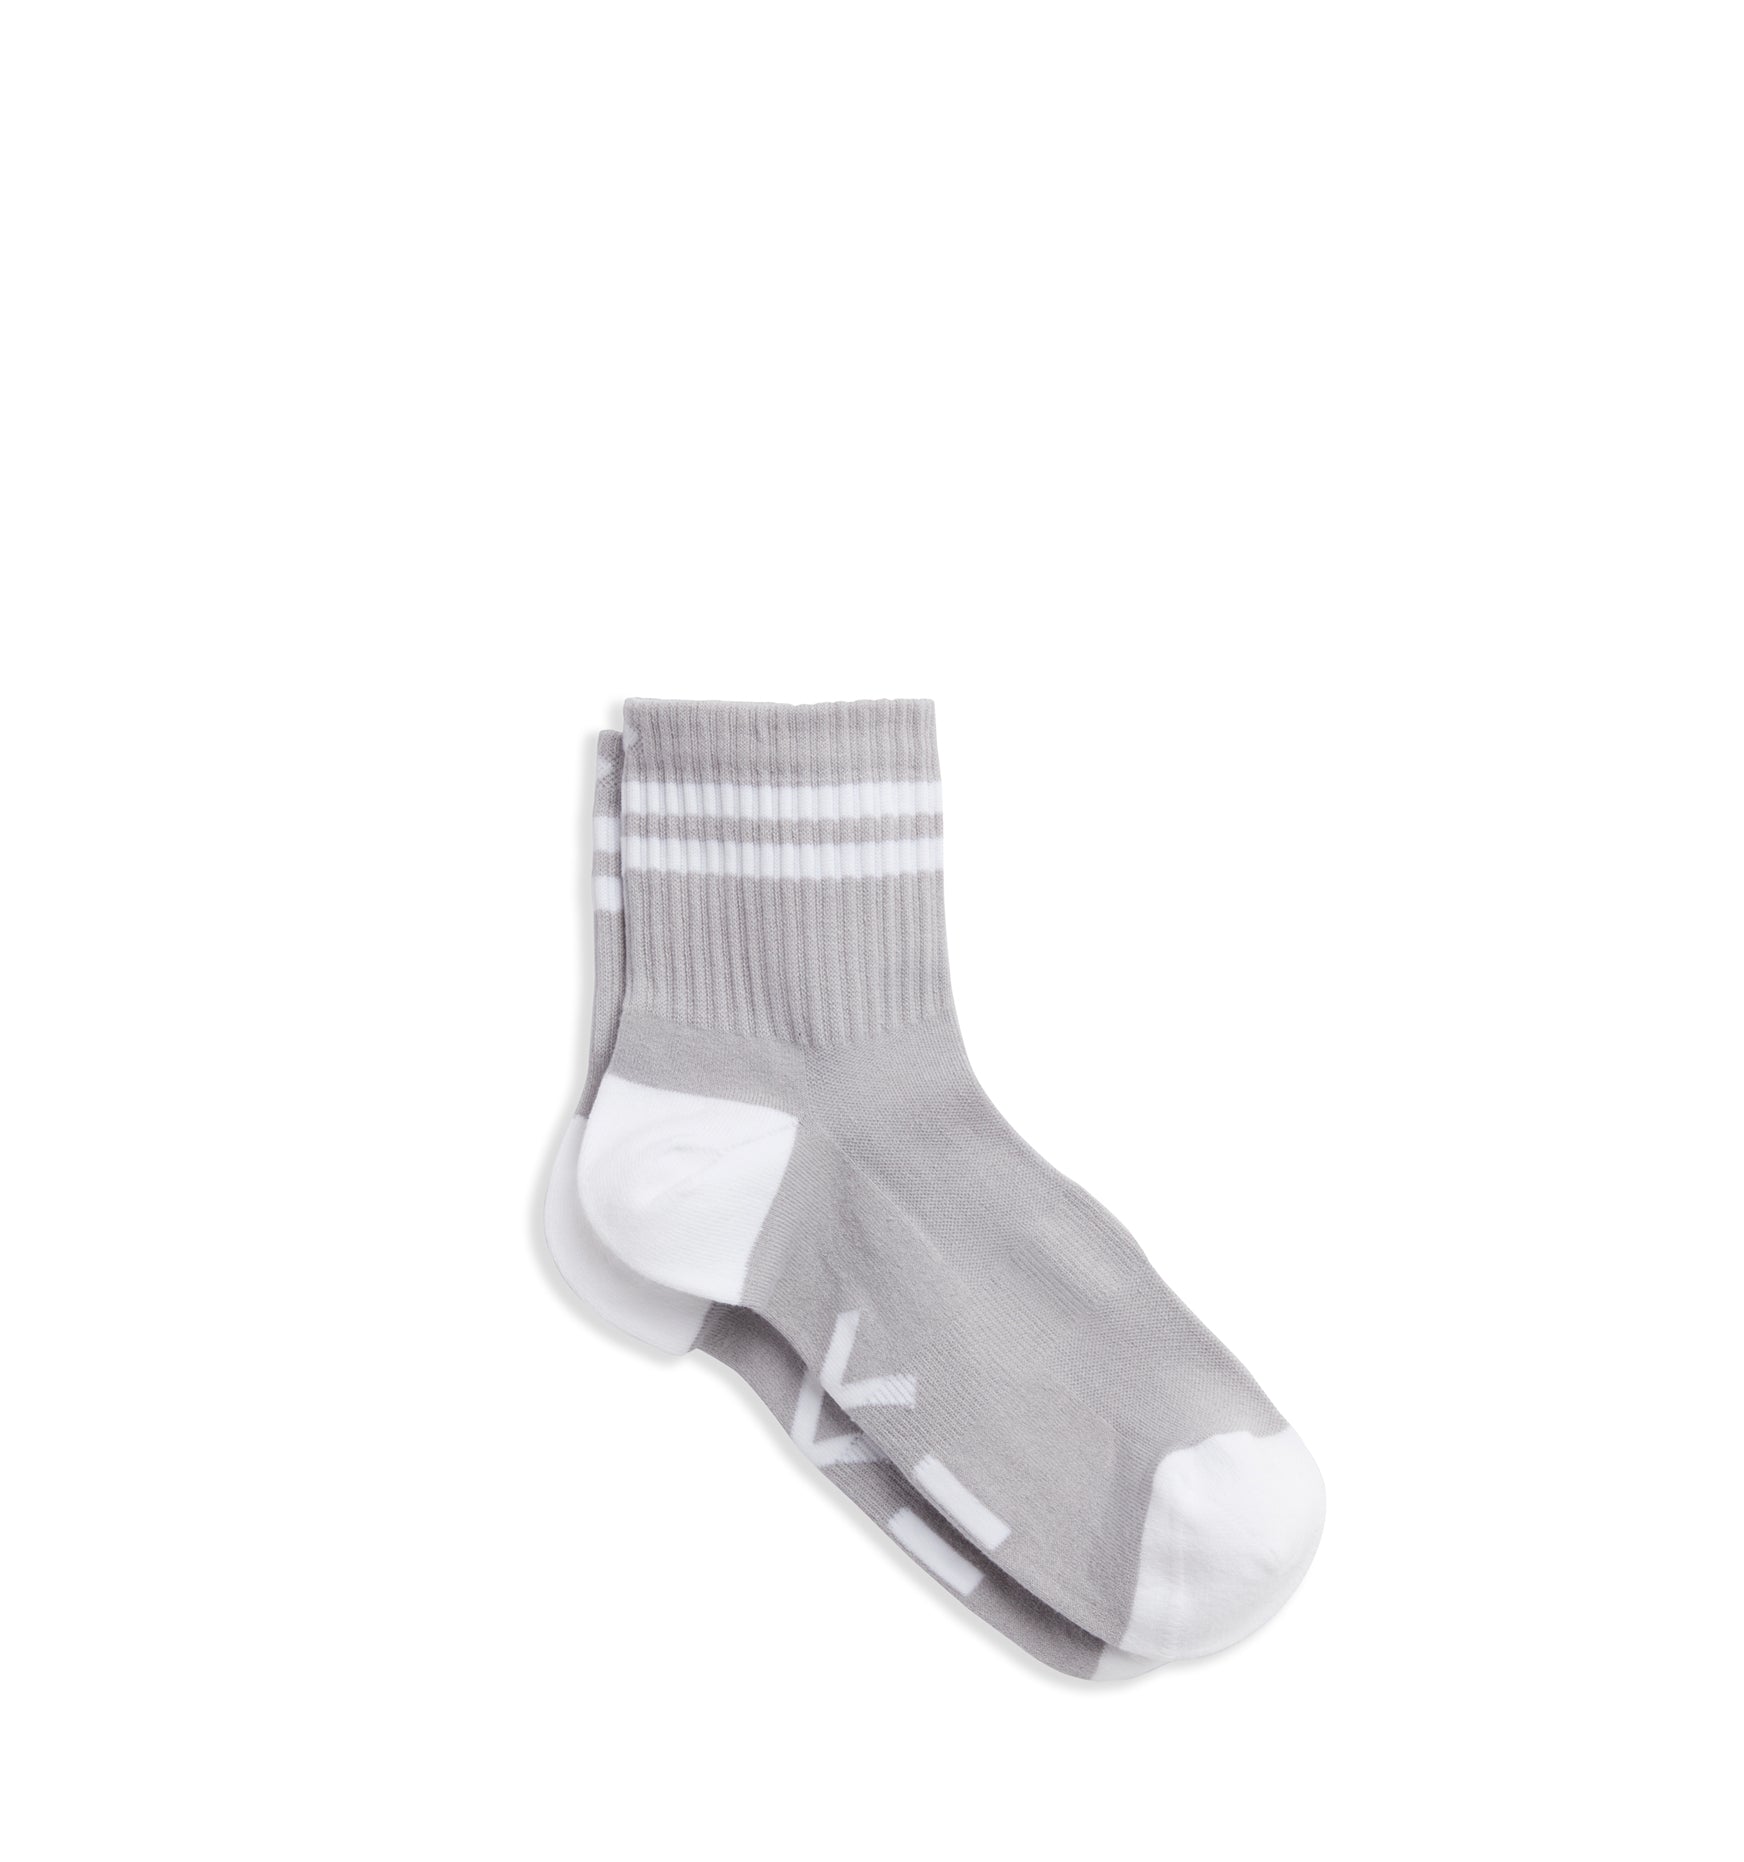 Performance Ankle Socks - Gray